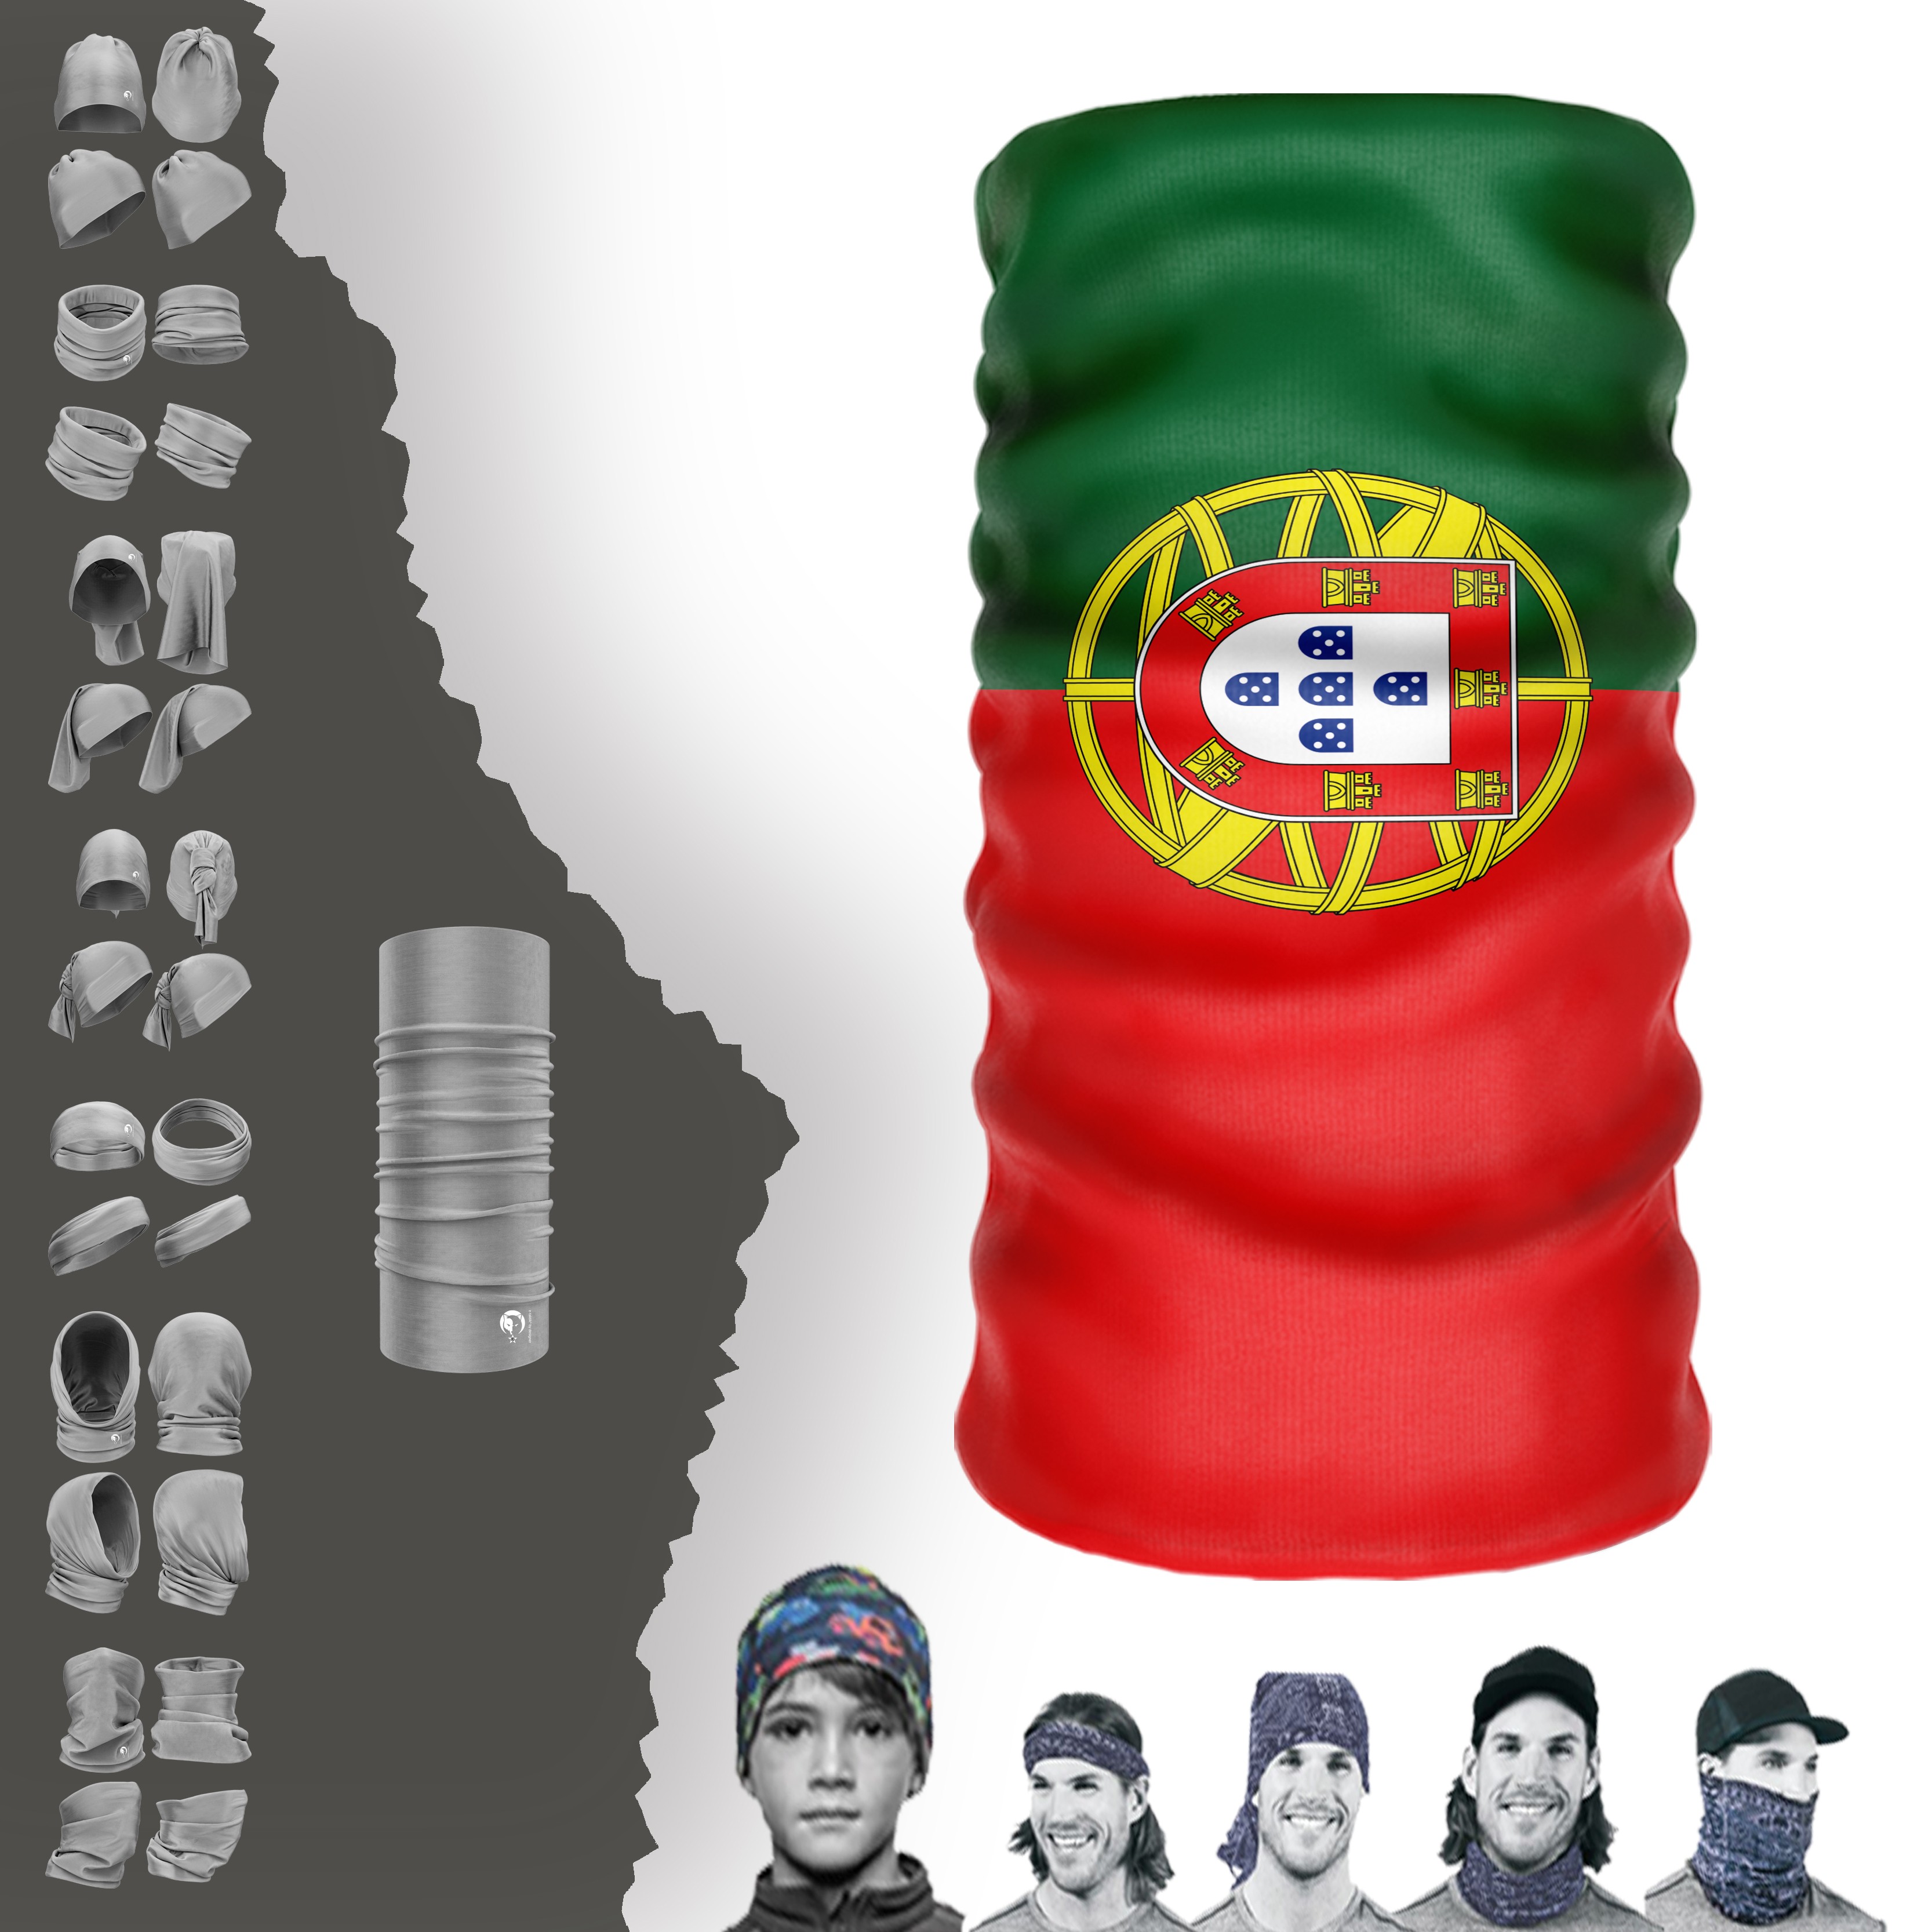 पुर्तगाल ध्वज गर्दन कॉलर बेनी बंडाना मास्क बोनट बकल हेडबैंड